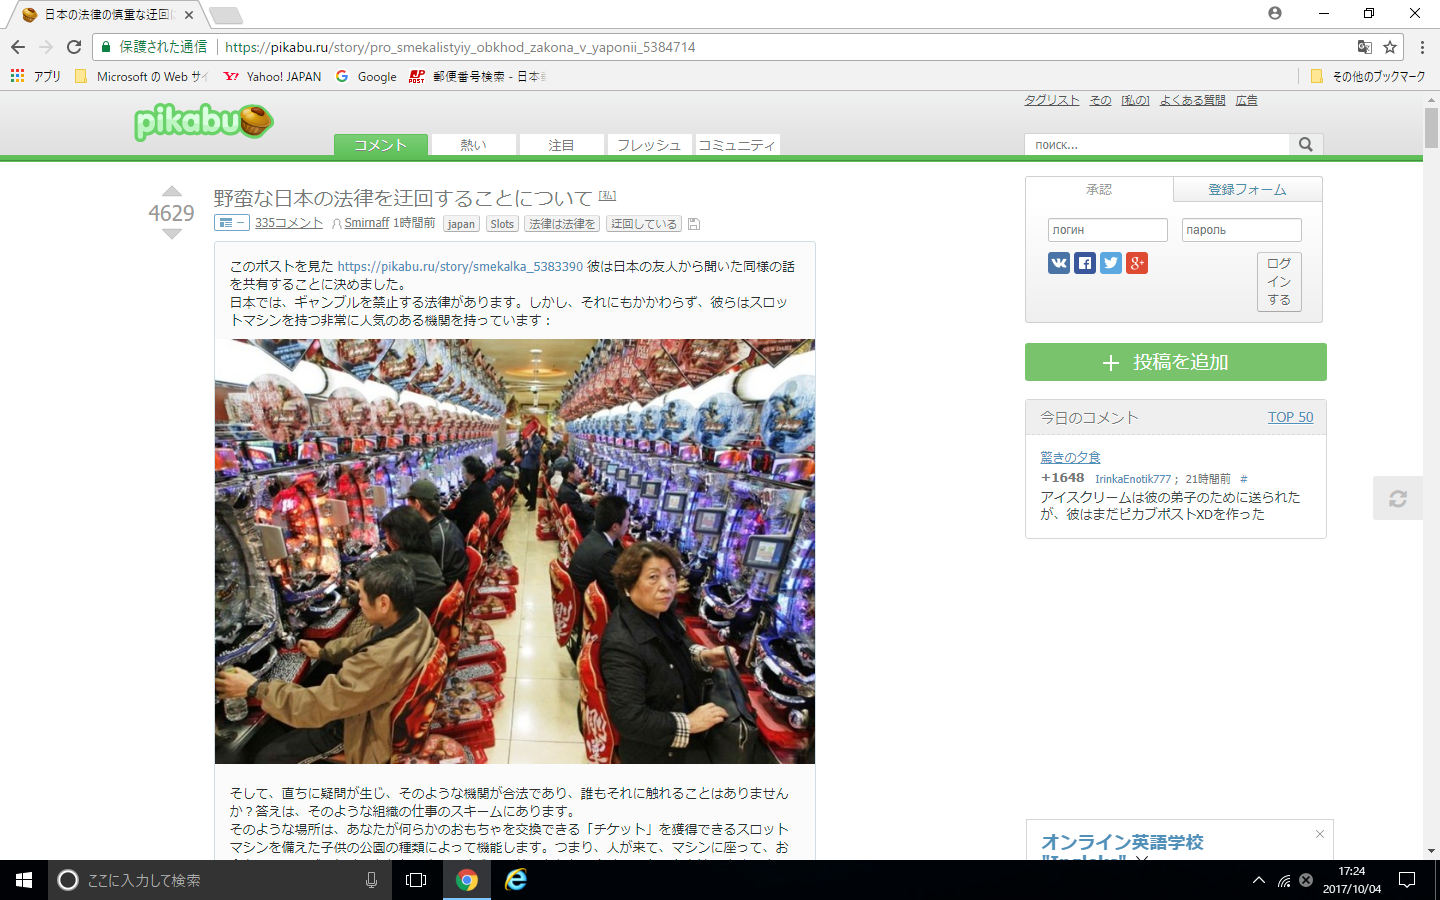 Kogda zahodish na pikabu iz Yaponii - Windows 10, Google chrome, Google translate, Meanwhile in Japan, Japan